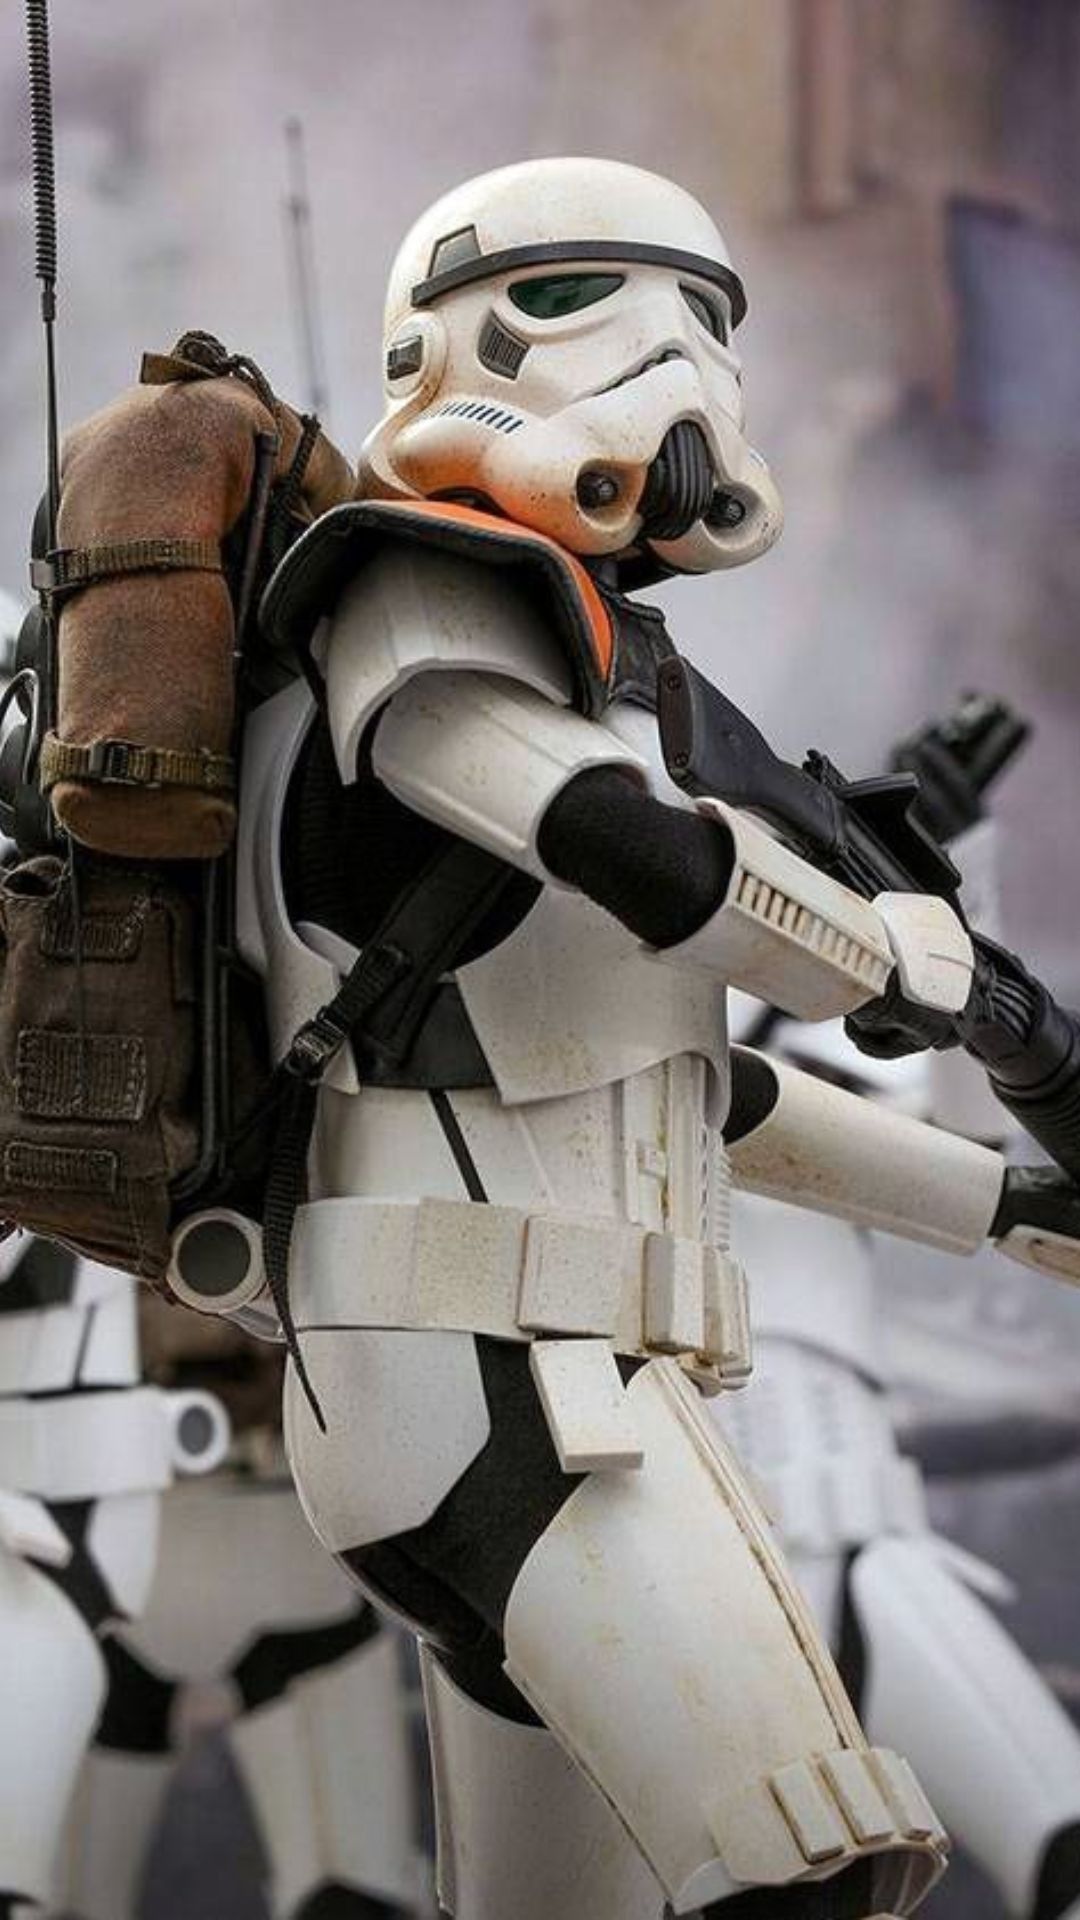 Imperial Stormtrooper, Officer ranK Star Wars. Star wars trooper, Star wars picture, Star wars empire